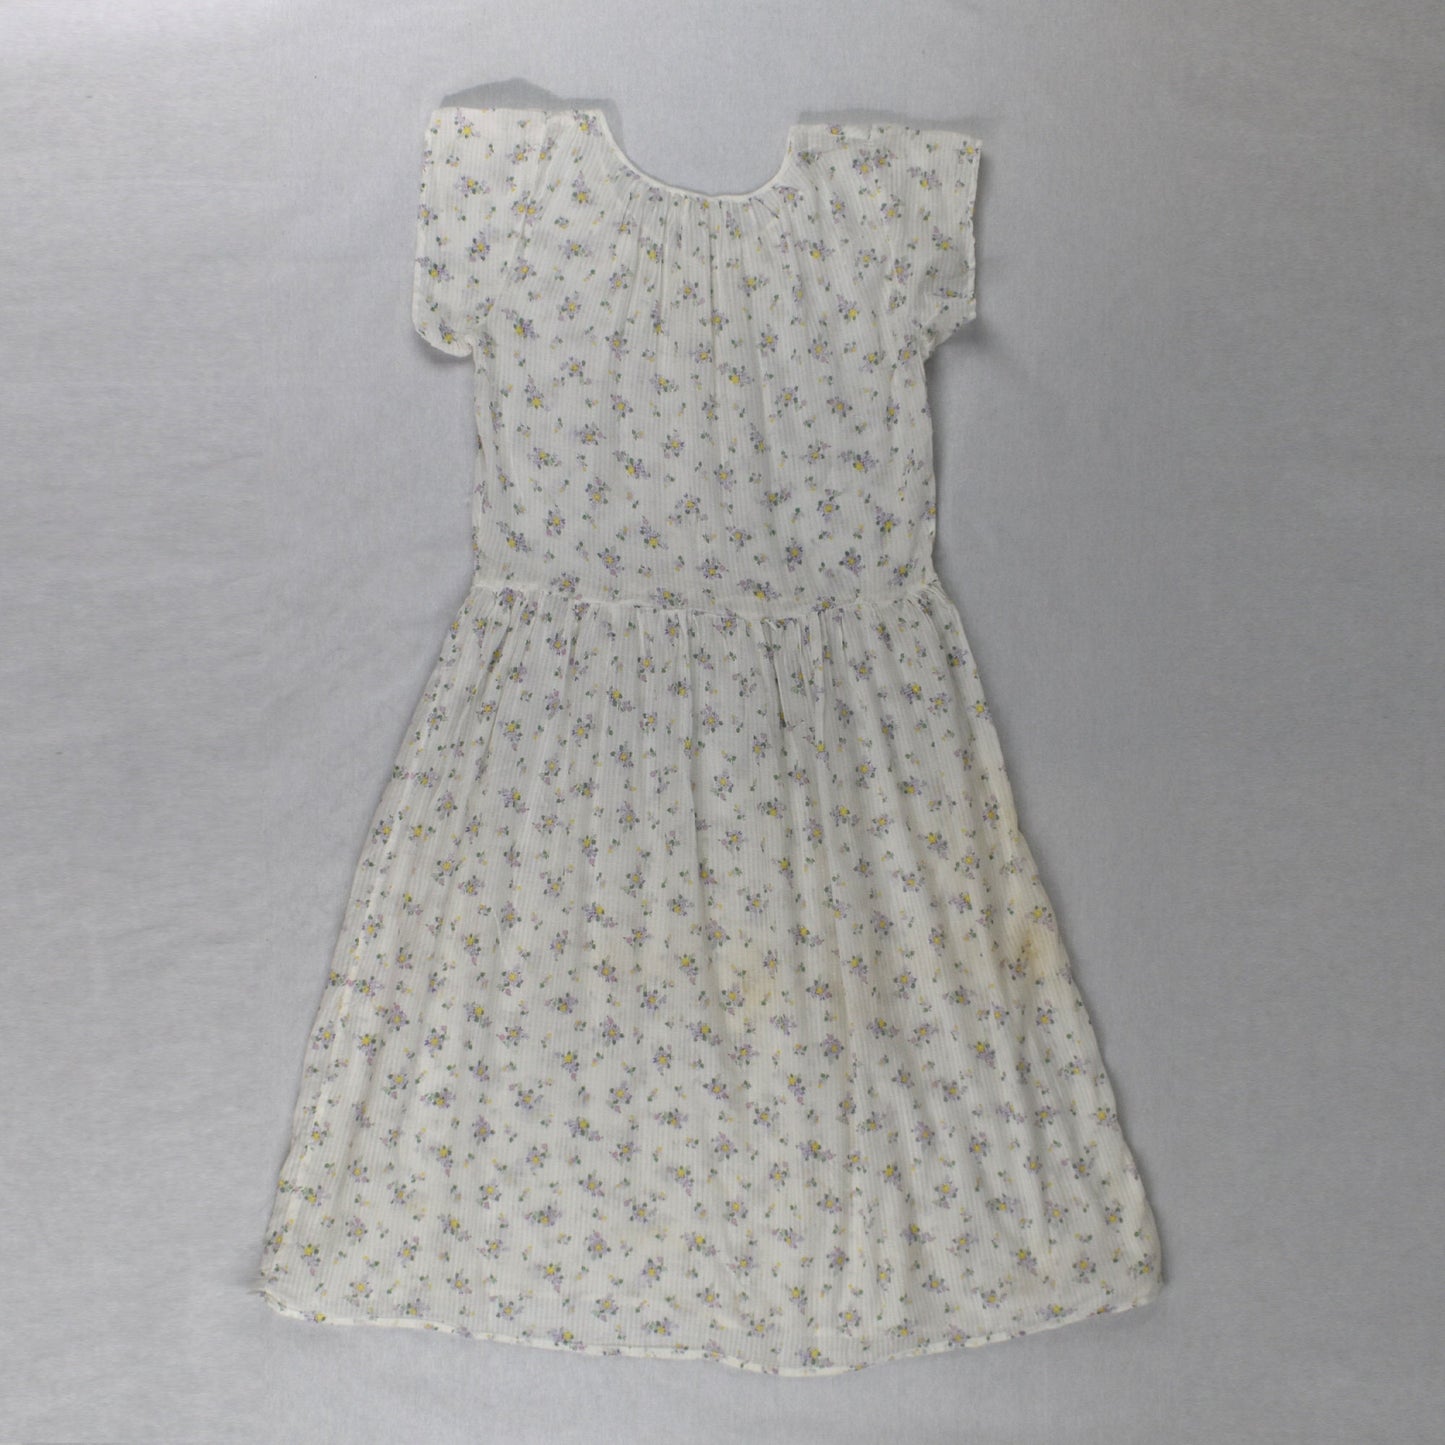 Vintage 1930's Cotton Floral Day Dress